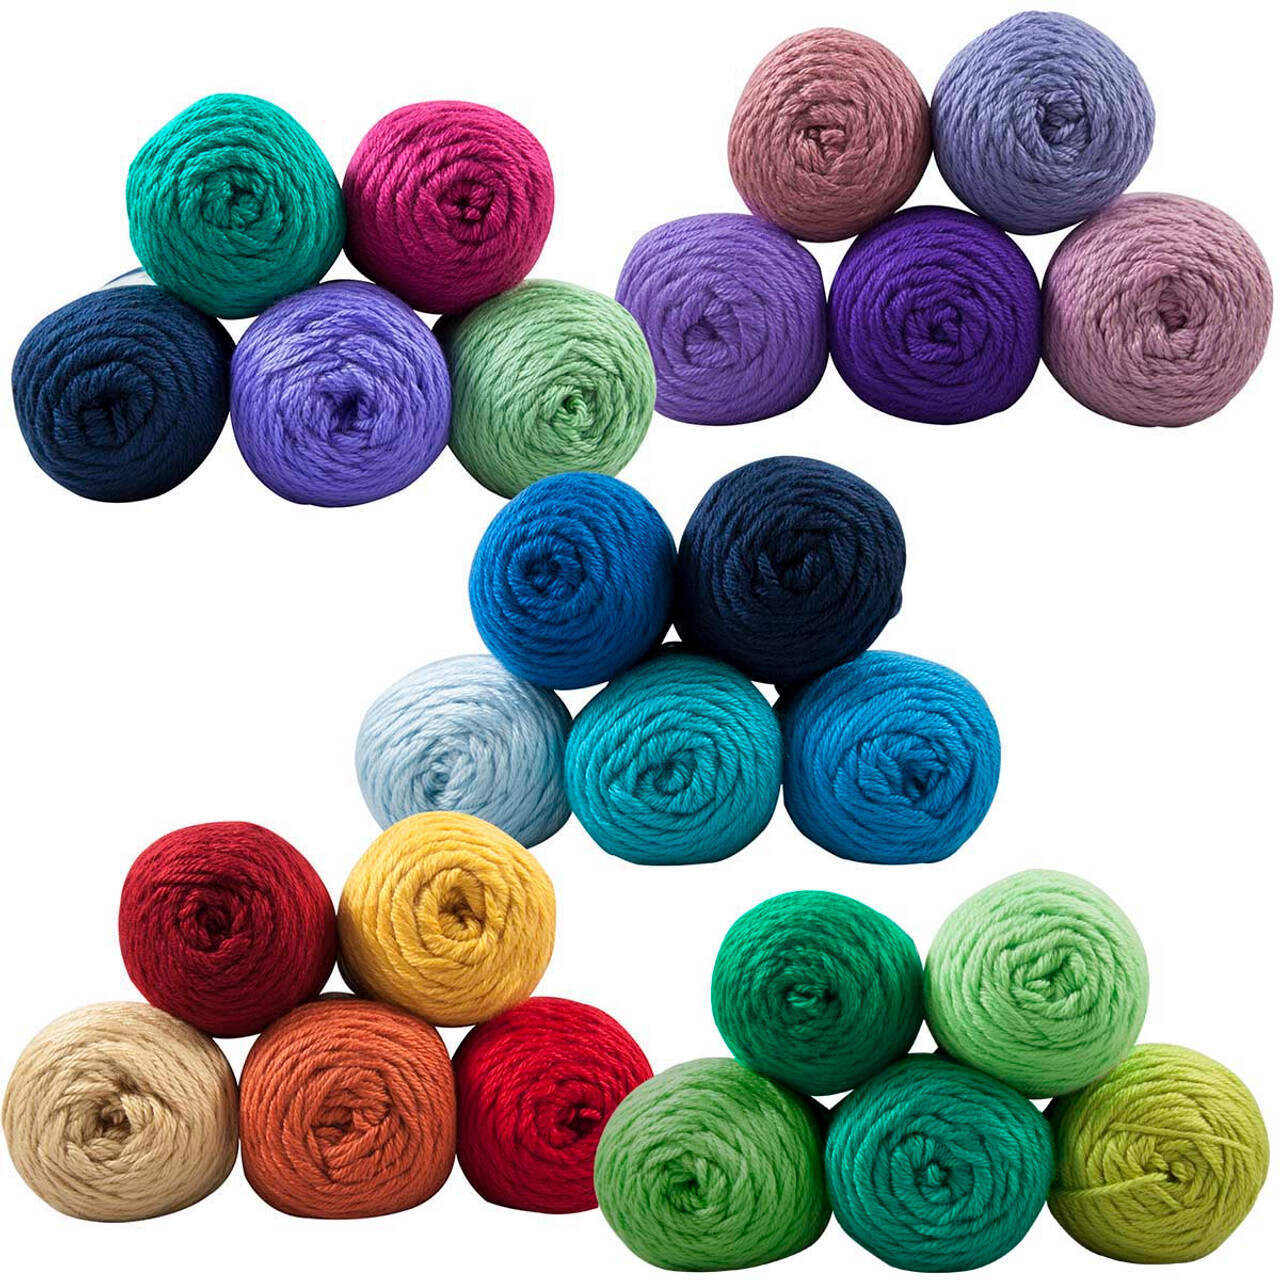 Caron Simply Soft Soft Pink Yarn - 3 Pack of 170g/6oz - Acrylic - 4 Medium  (Worsted) - 315 Yards - Knitting, Crocheting & Crafts